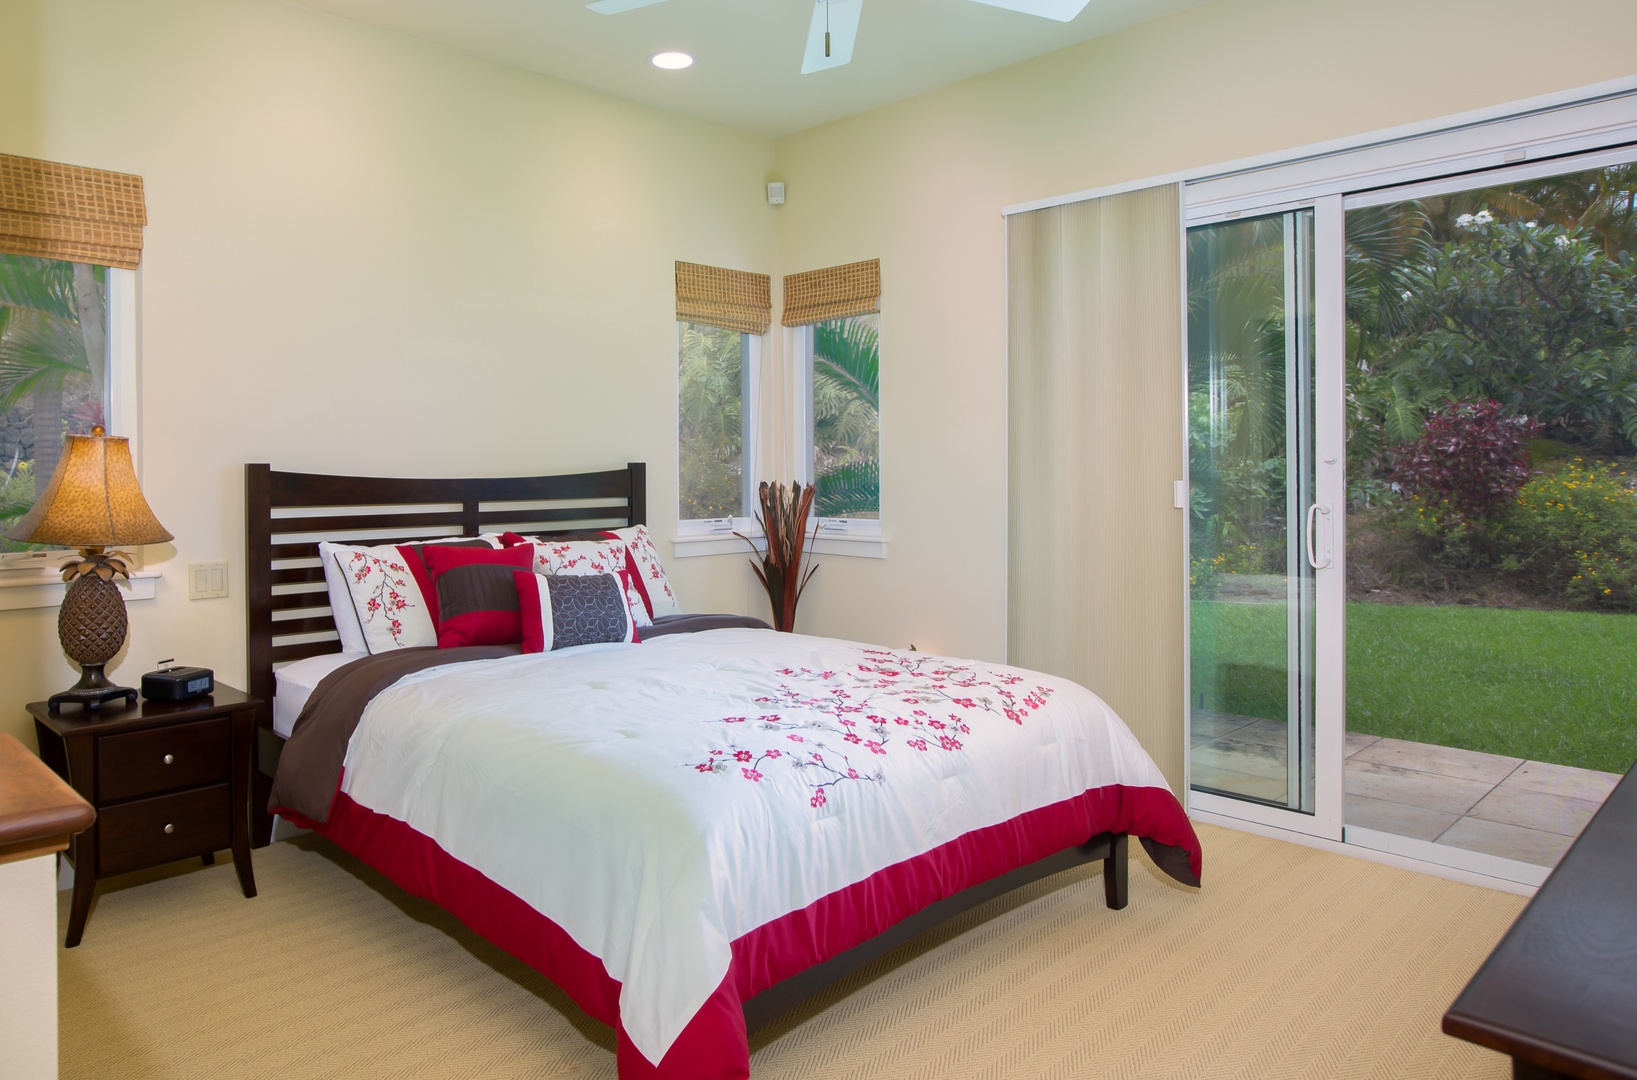 Kailua Kona Vacation Rentals, Hale Maluhia (Big Island) - Guest bedroom #3